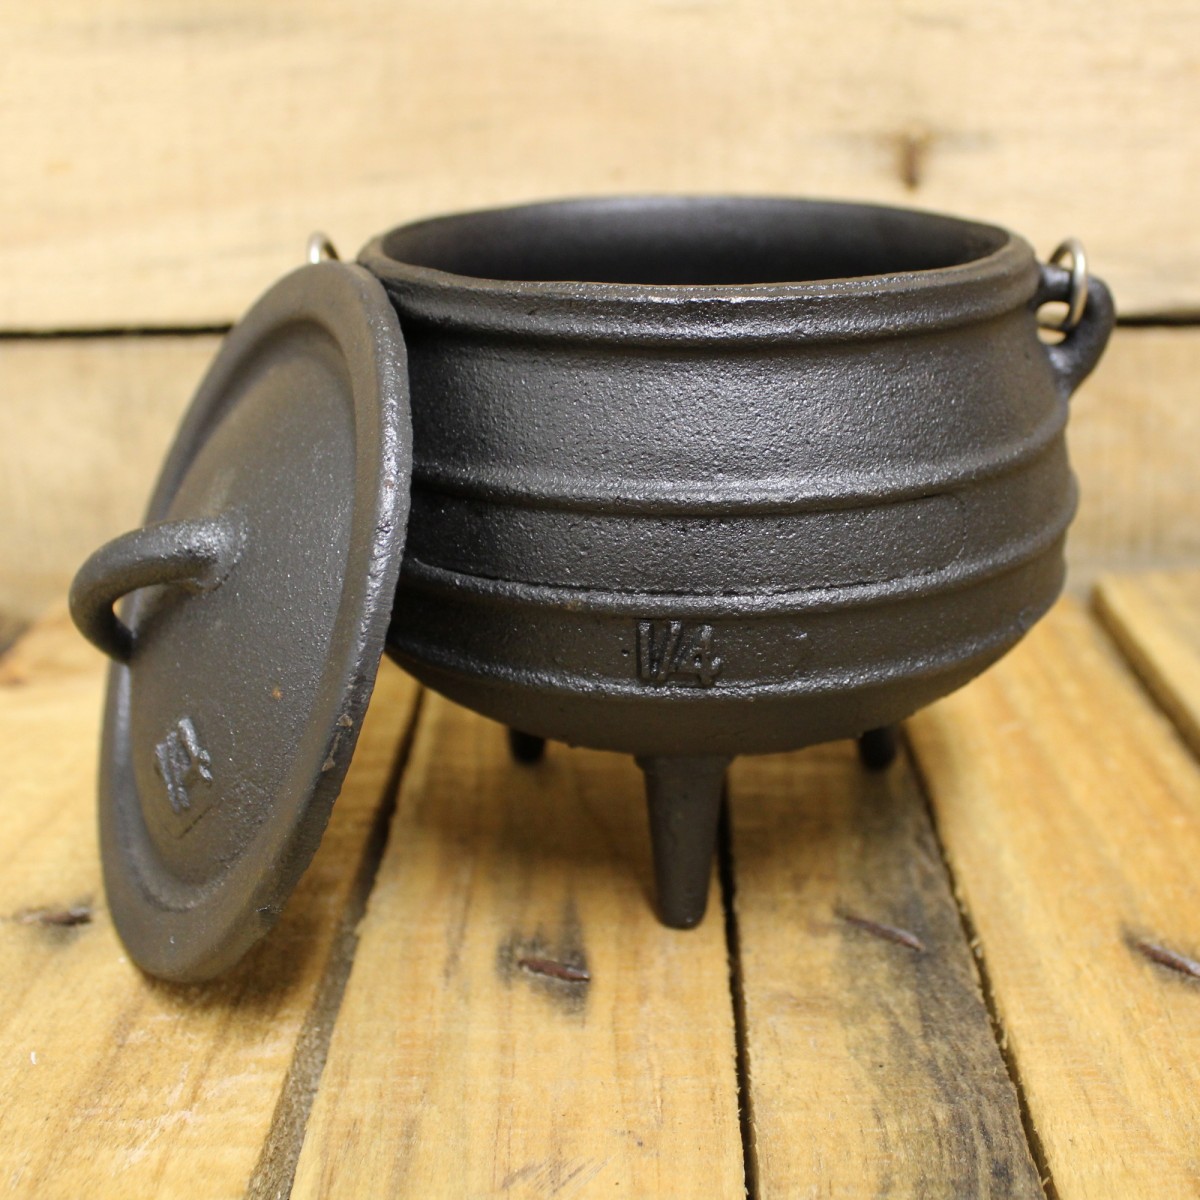 Potbelly Cast Iron Cooking Pot - Witches Cauldron - Potjie Pot